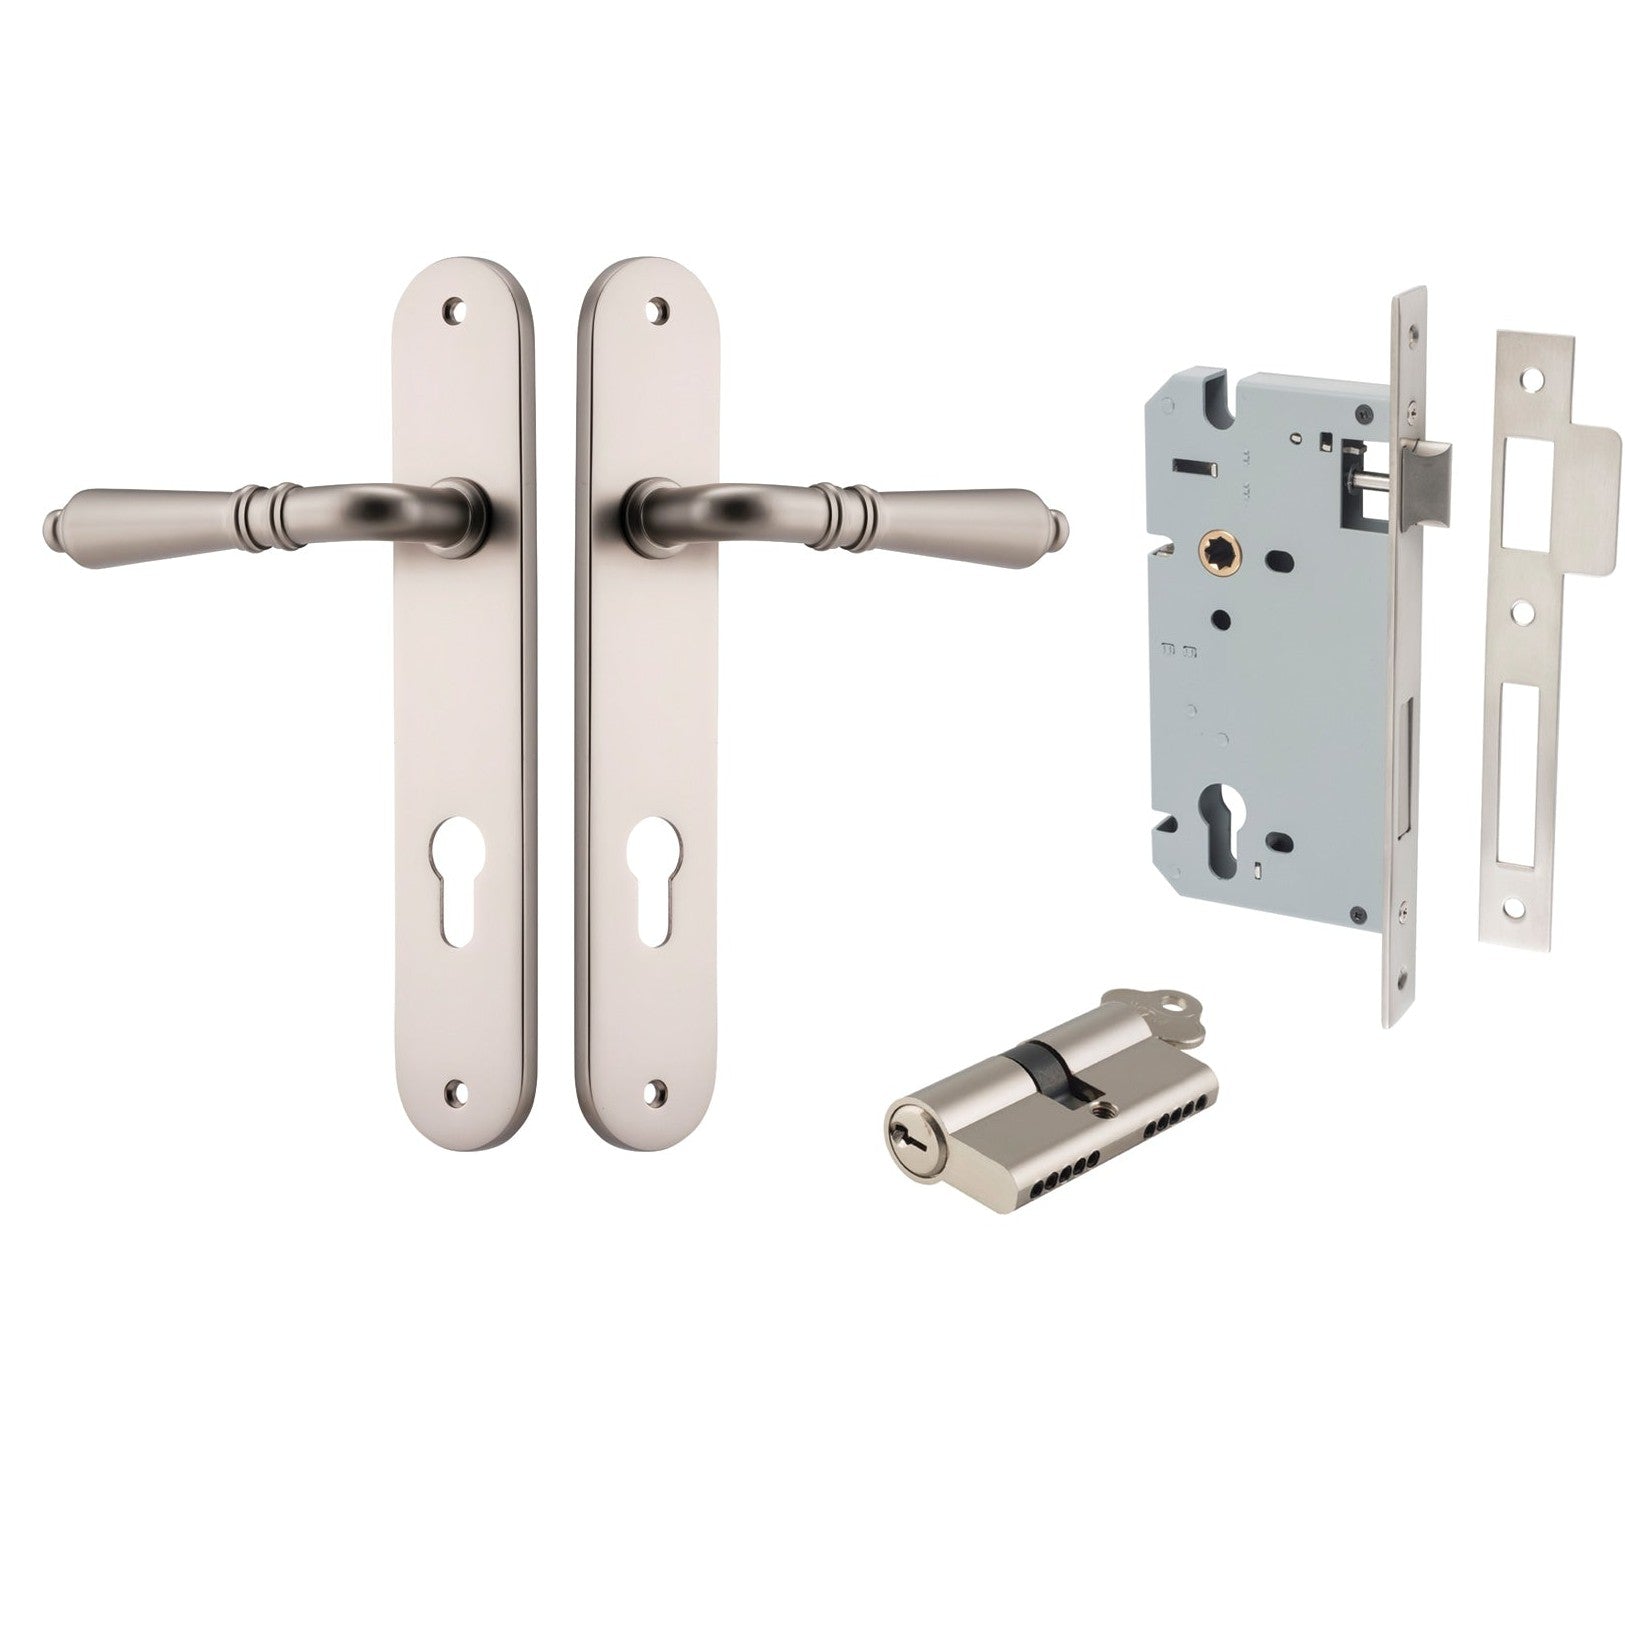 Iver Door Handle Sarlat Oval Euro Key/Key Satin Nickel Entrance Kit